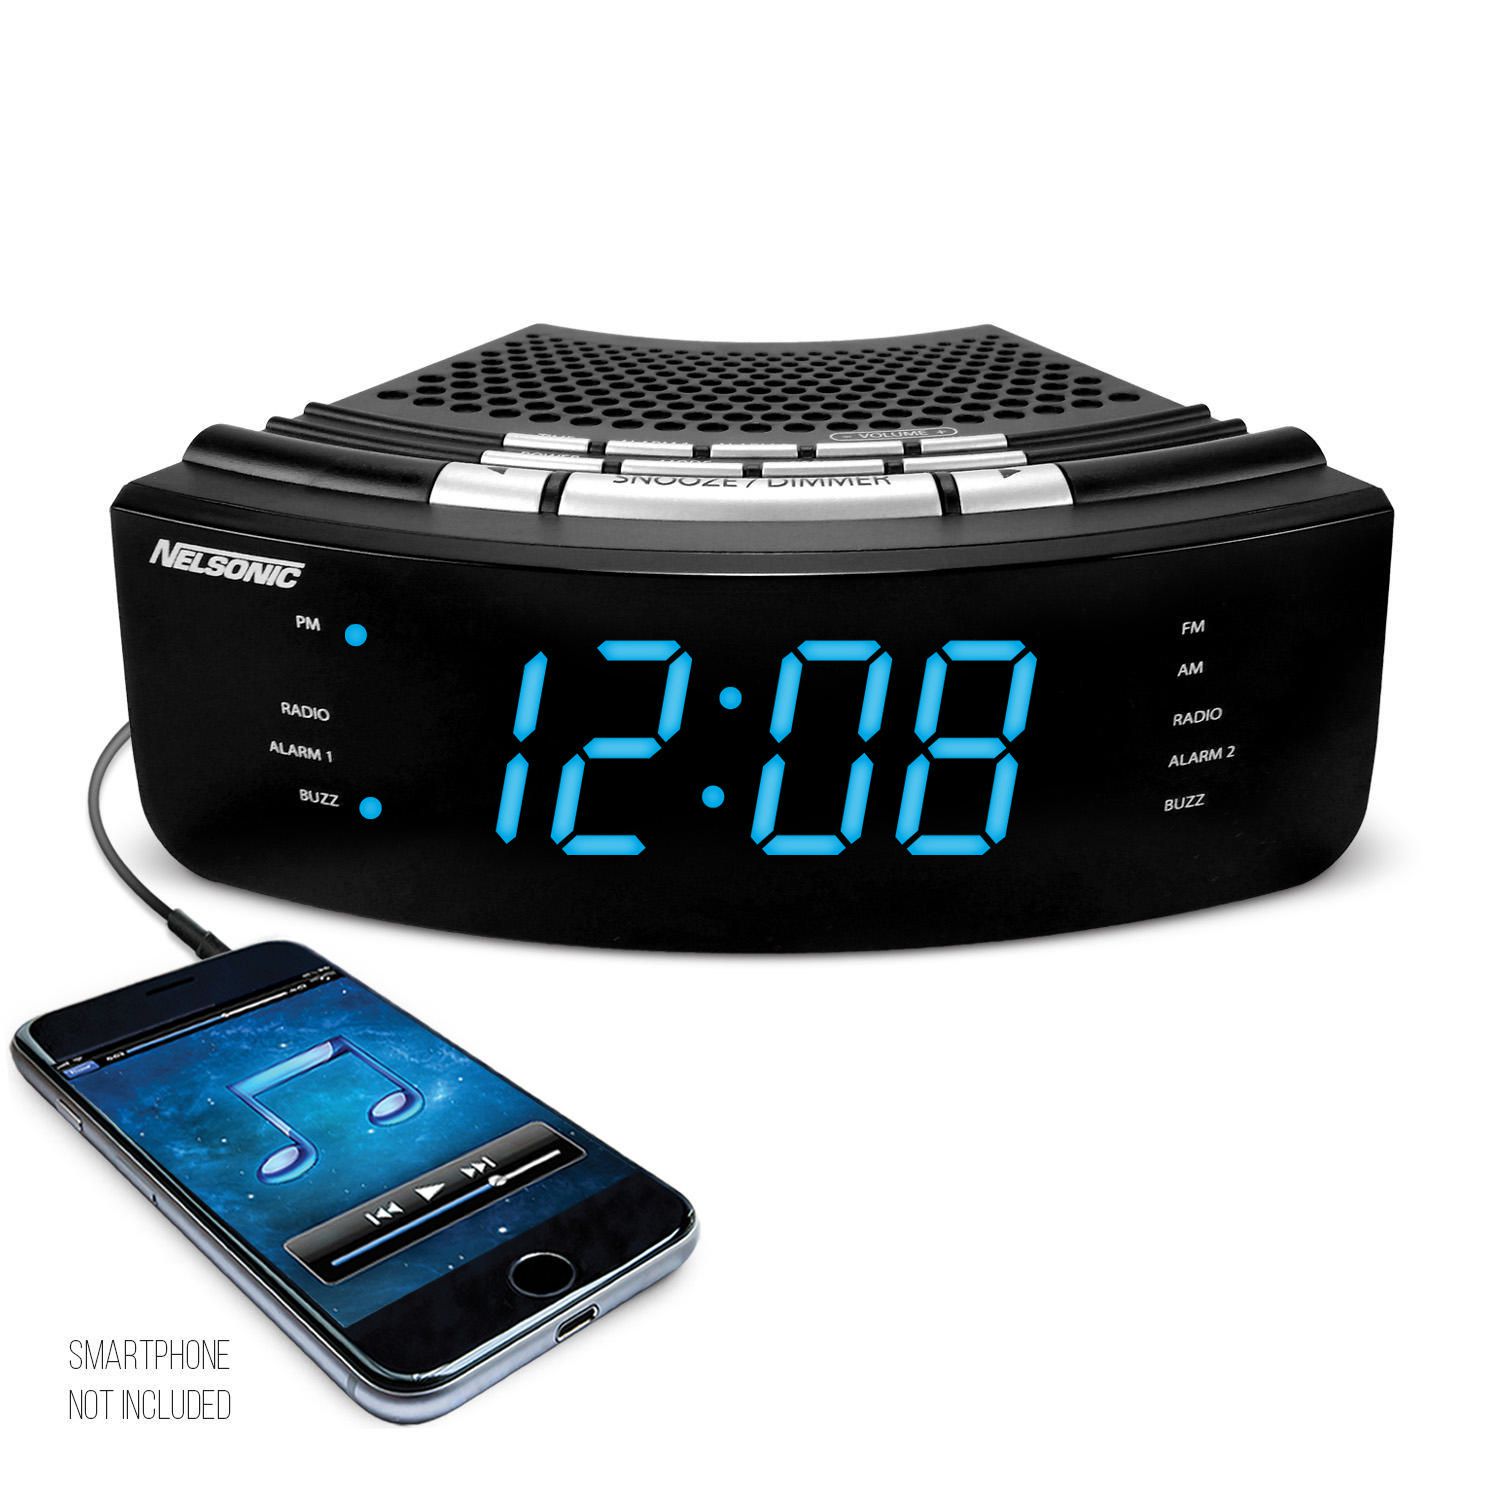 am fm radio alarm clock with weather forecast